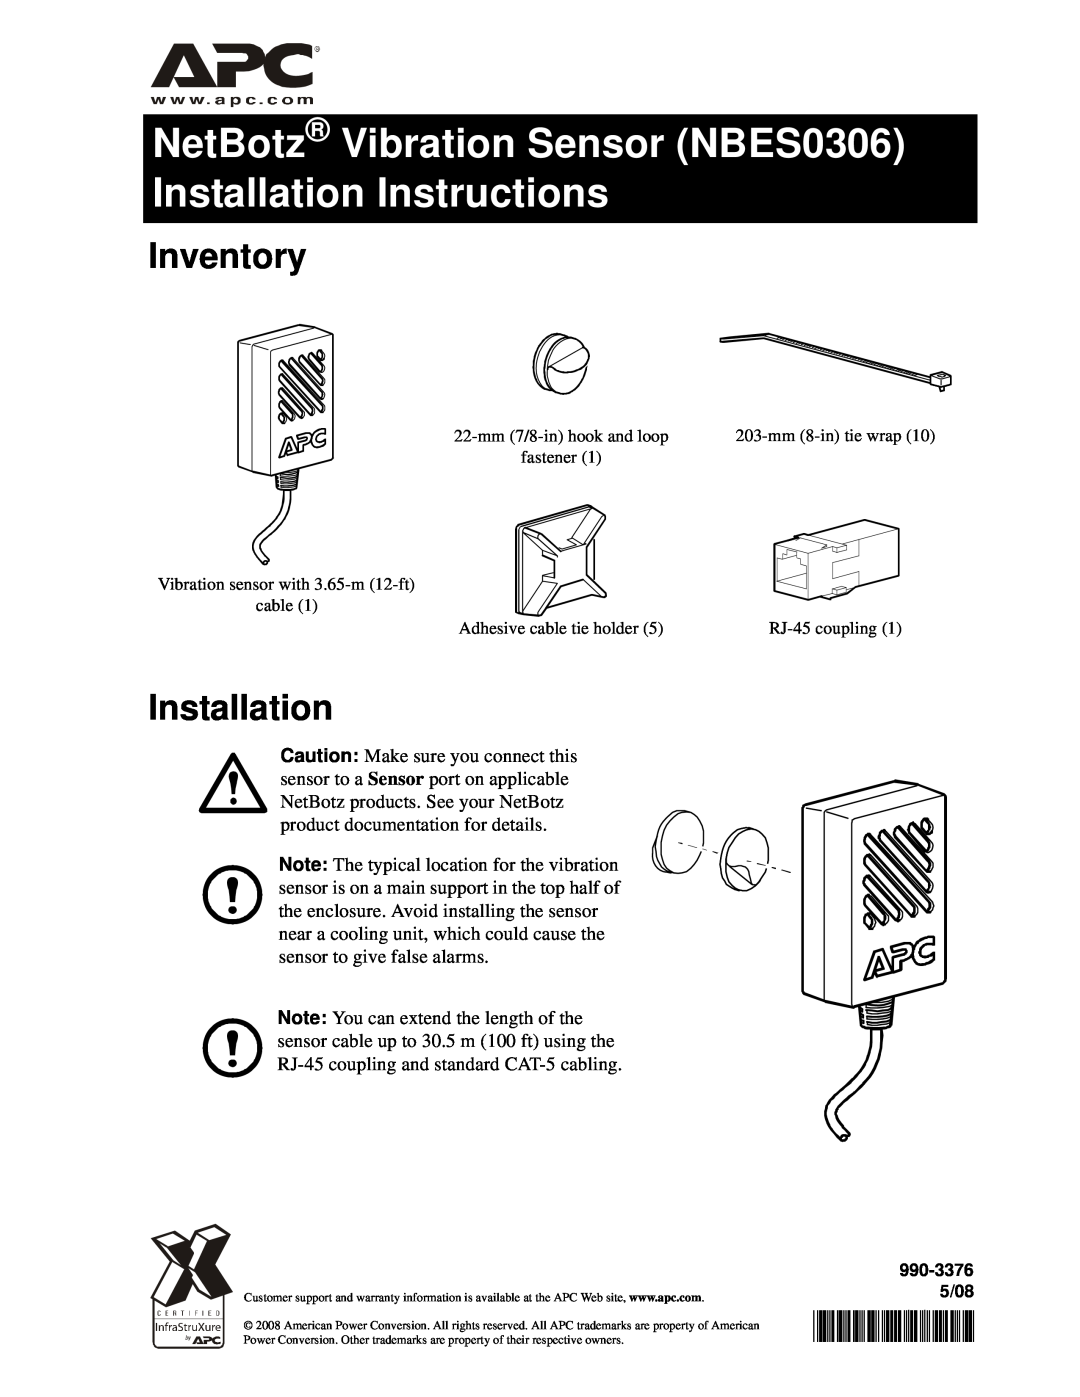 APC NBES0306 installation instructions Inventory, Installation, 990-33765/08 